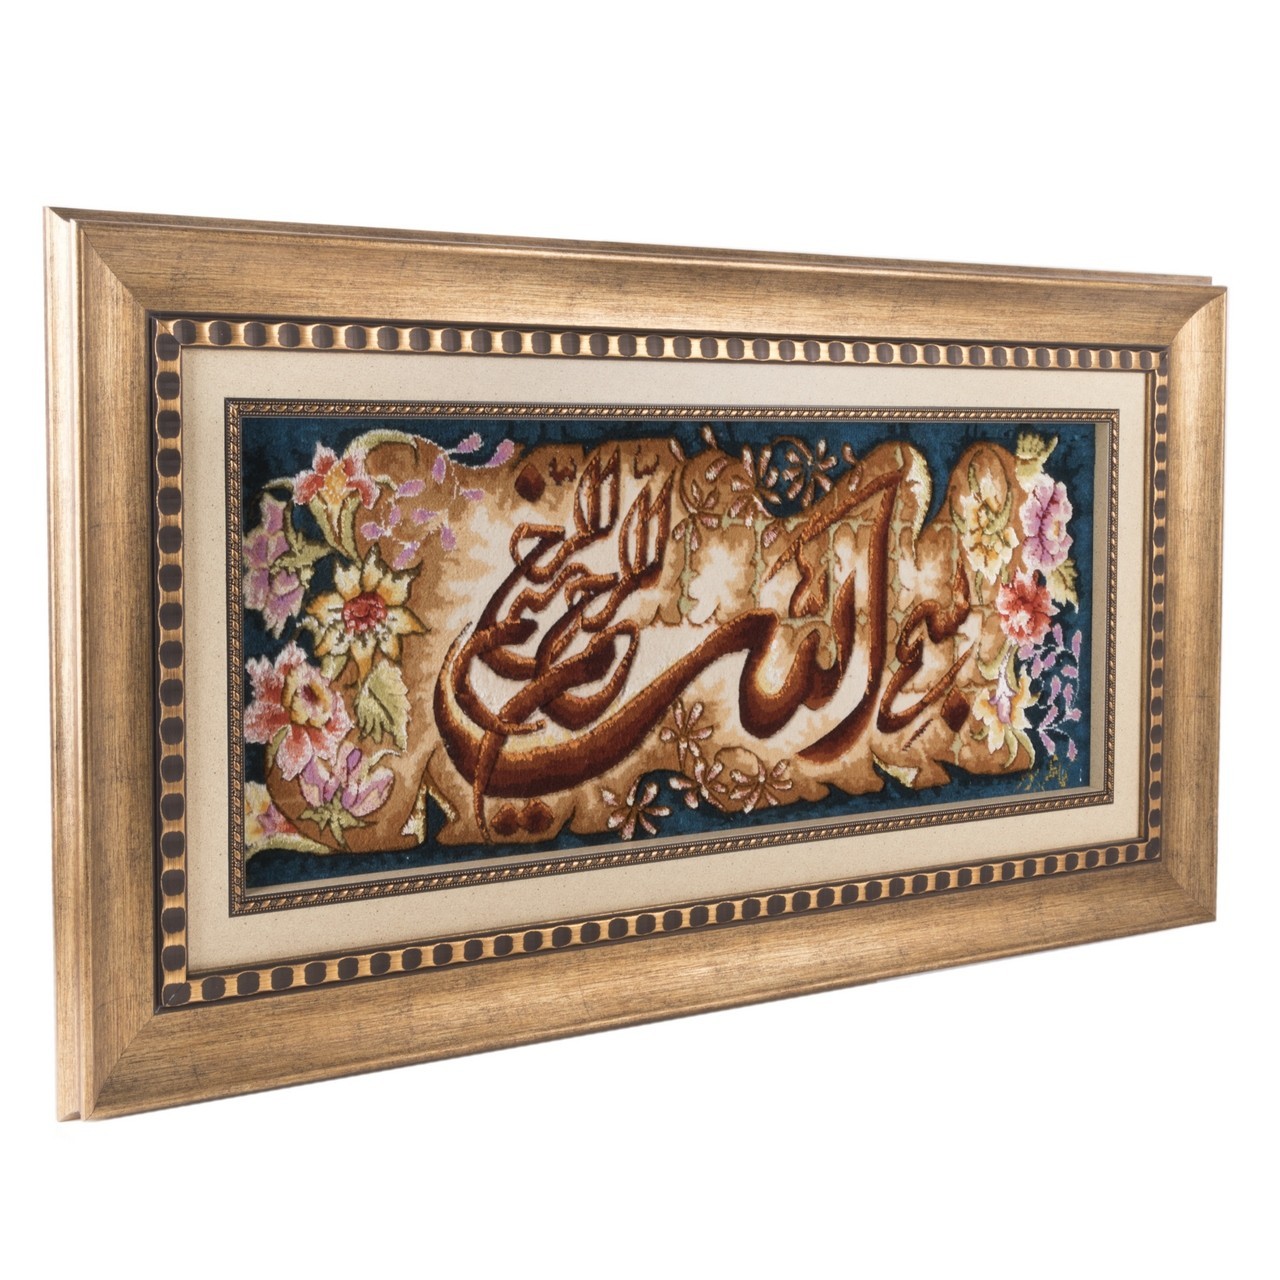 Pictorial Tabriz Carpet Ref: 901675